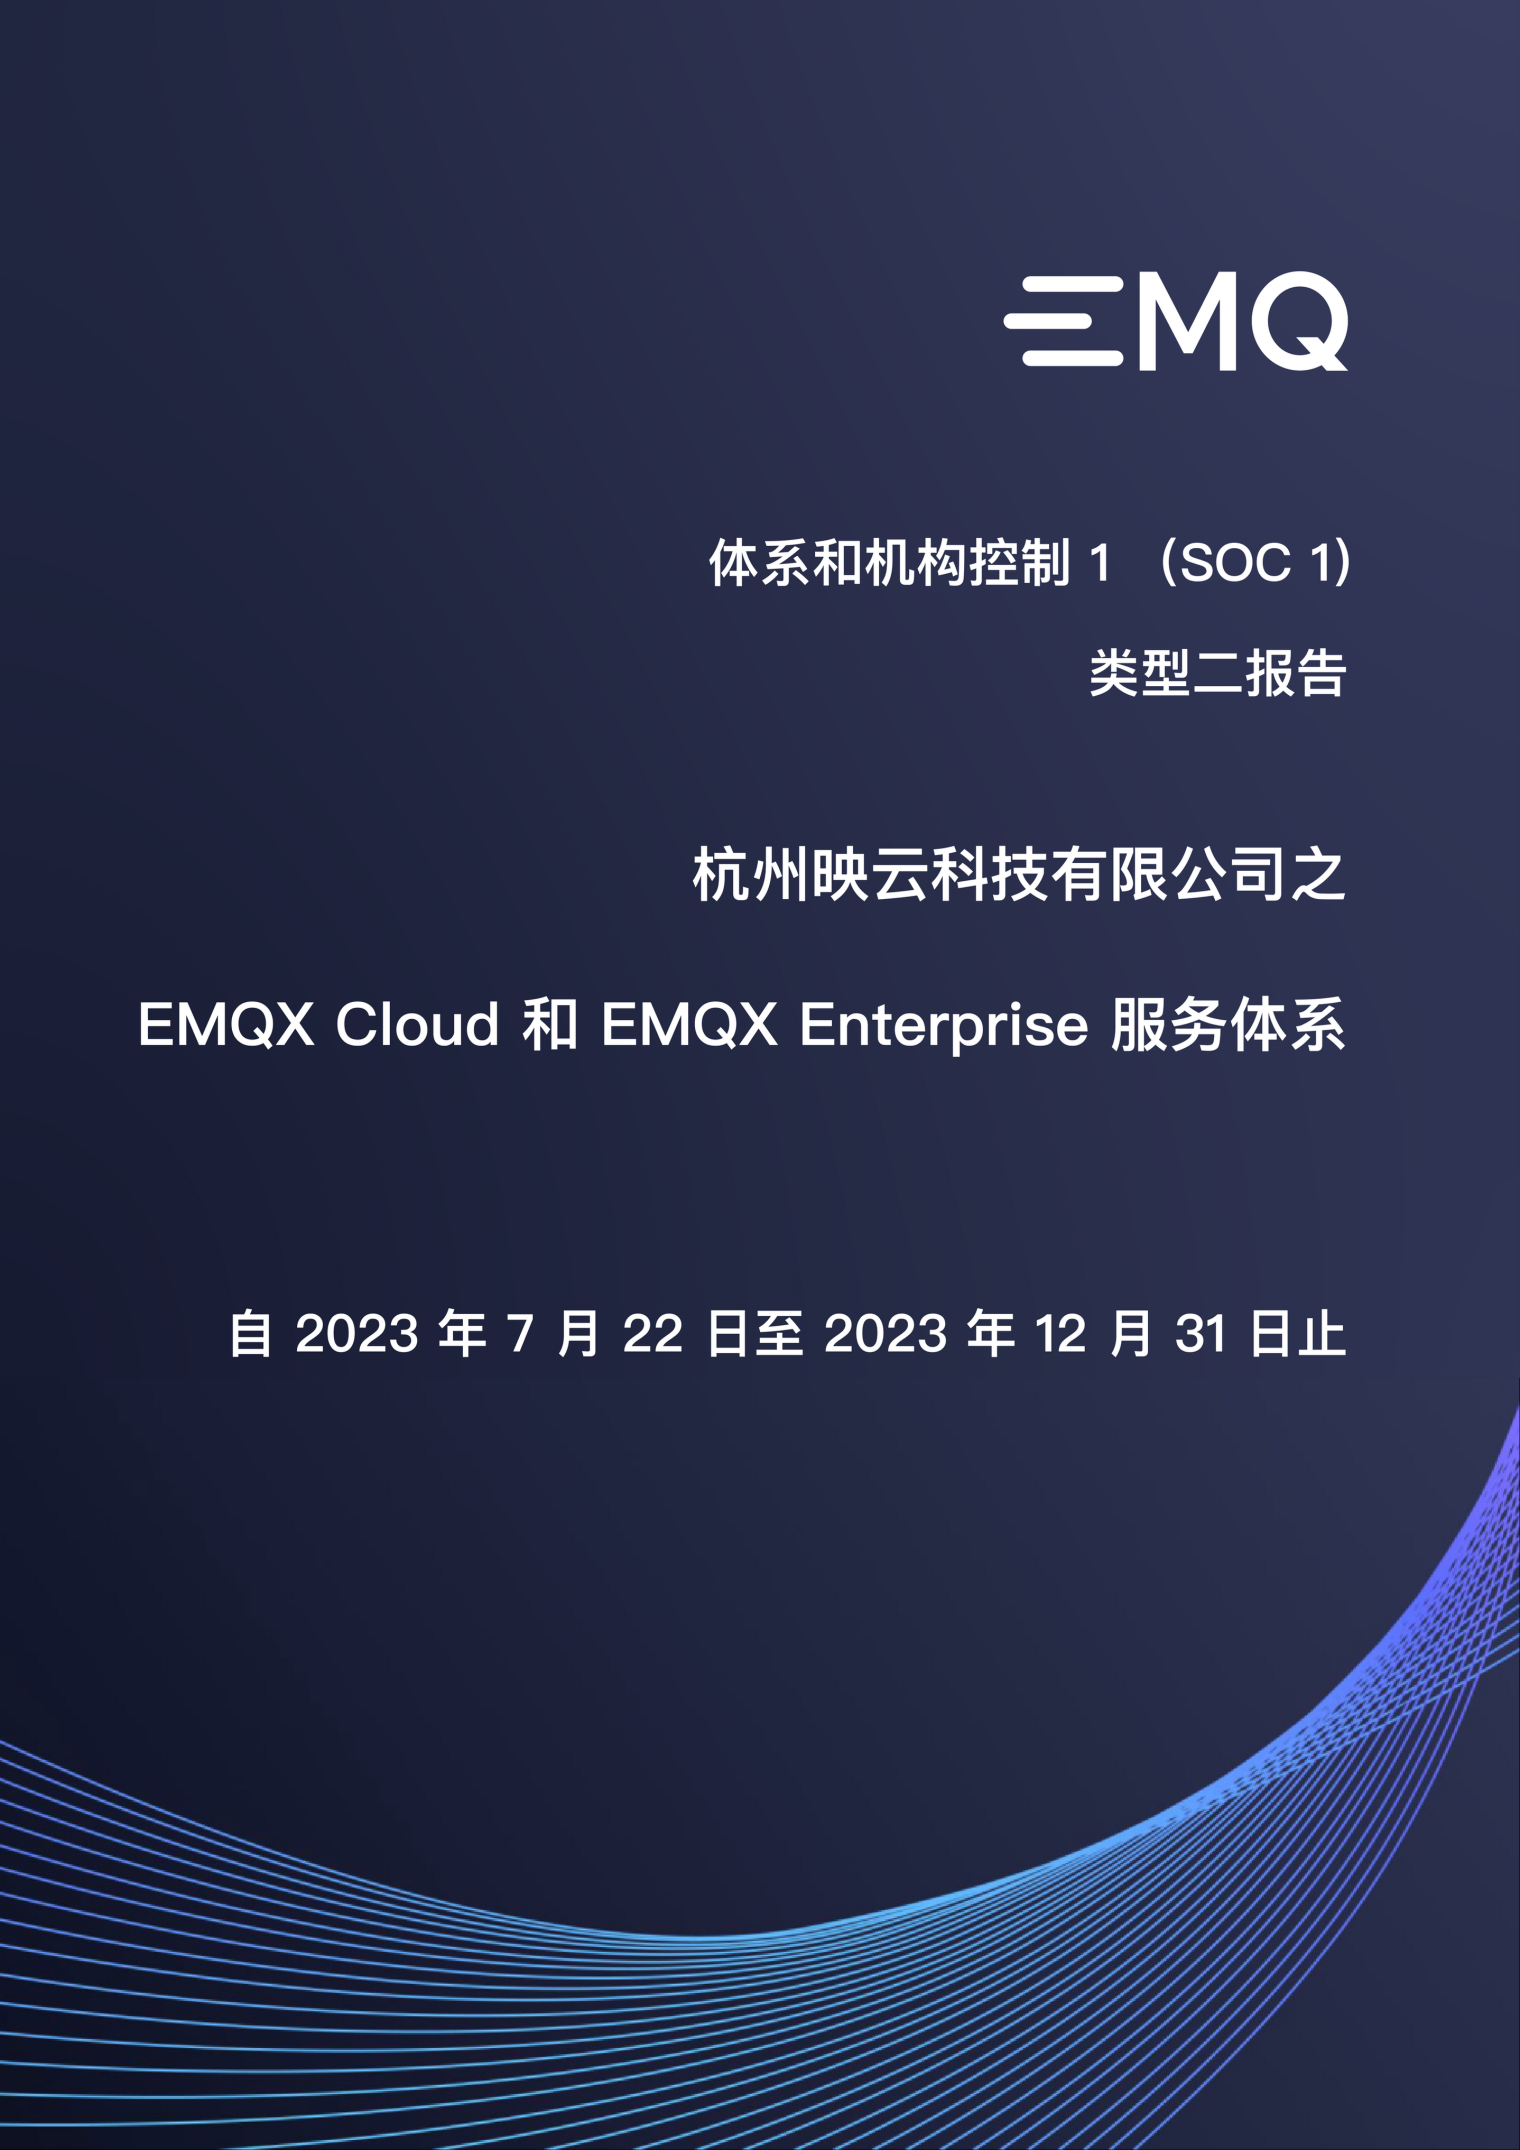 EMQ 正式通过国际权威鉴证标准 SOC 1 审计